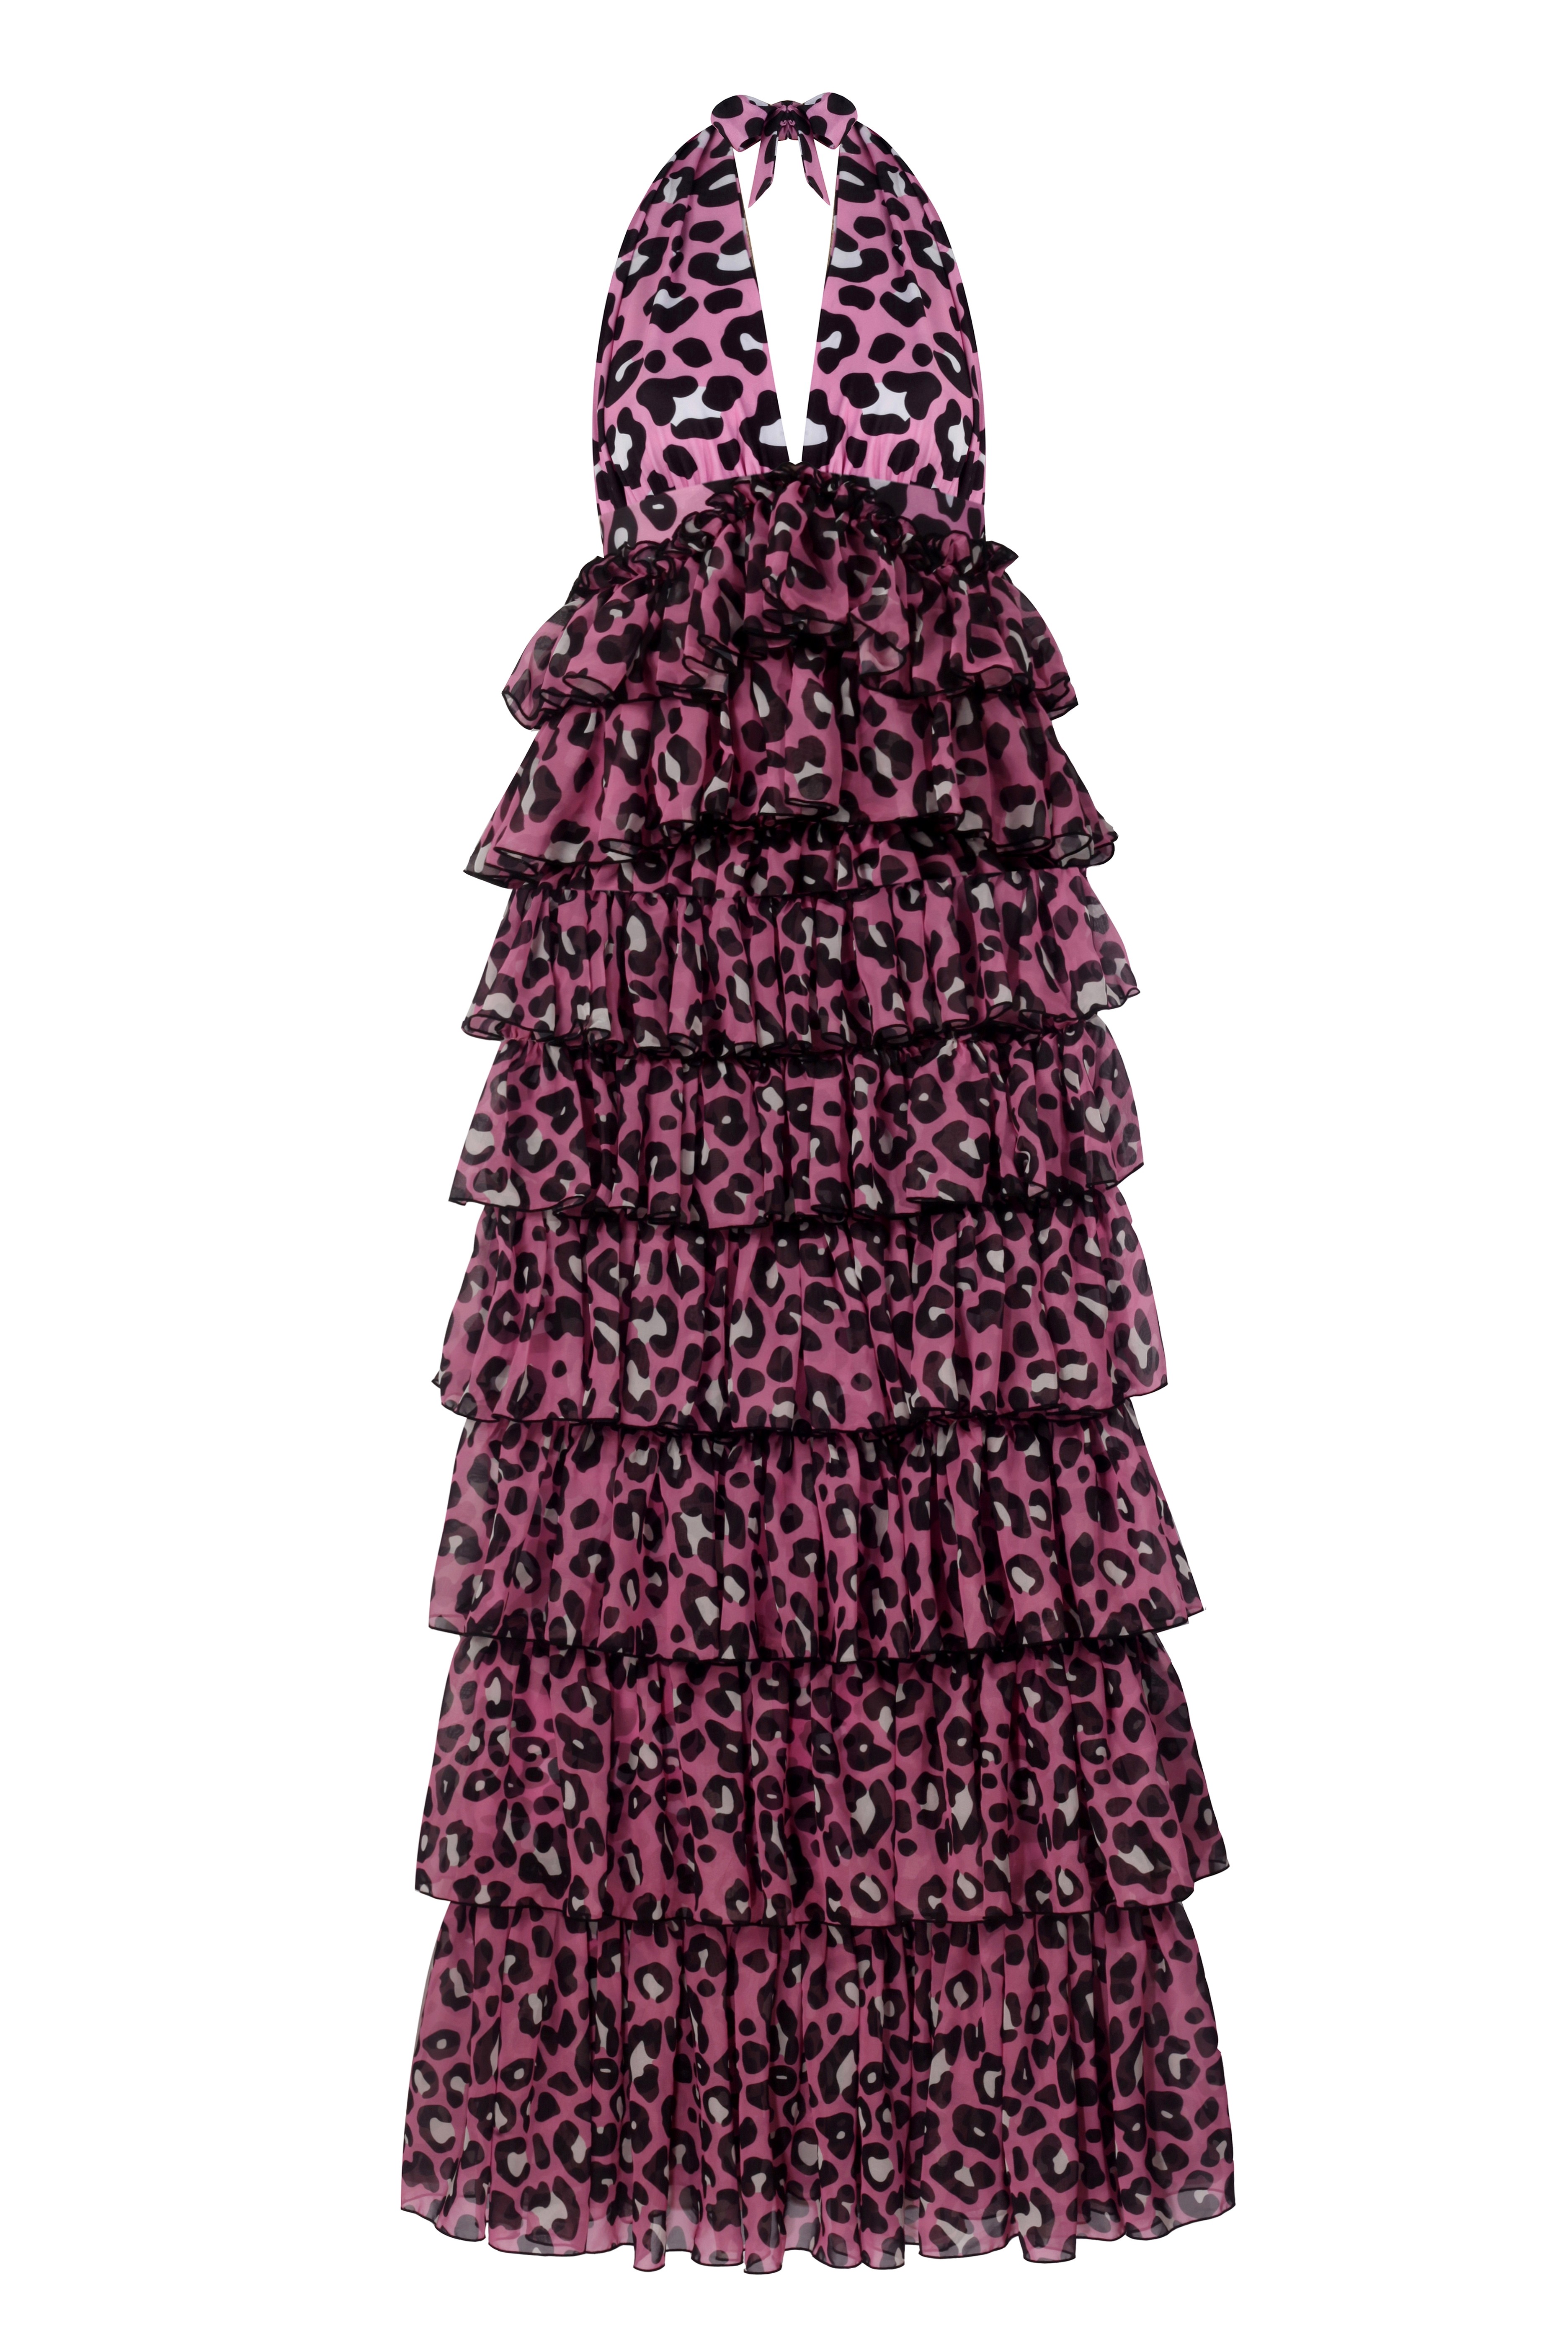 Florentina Pink Leo Dress